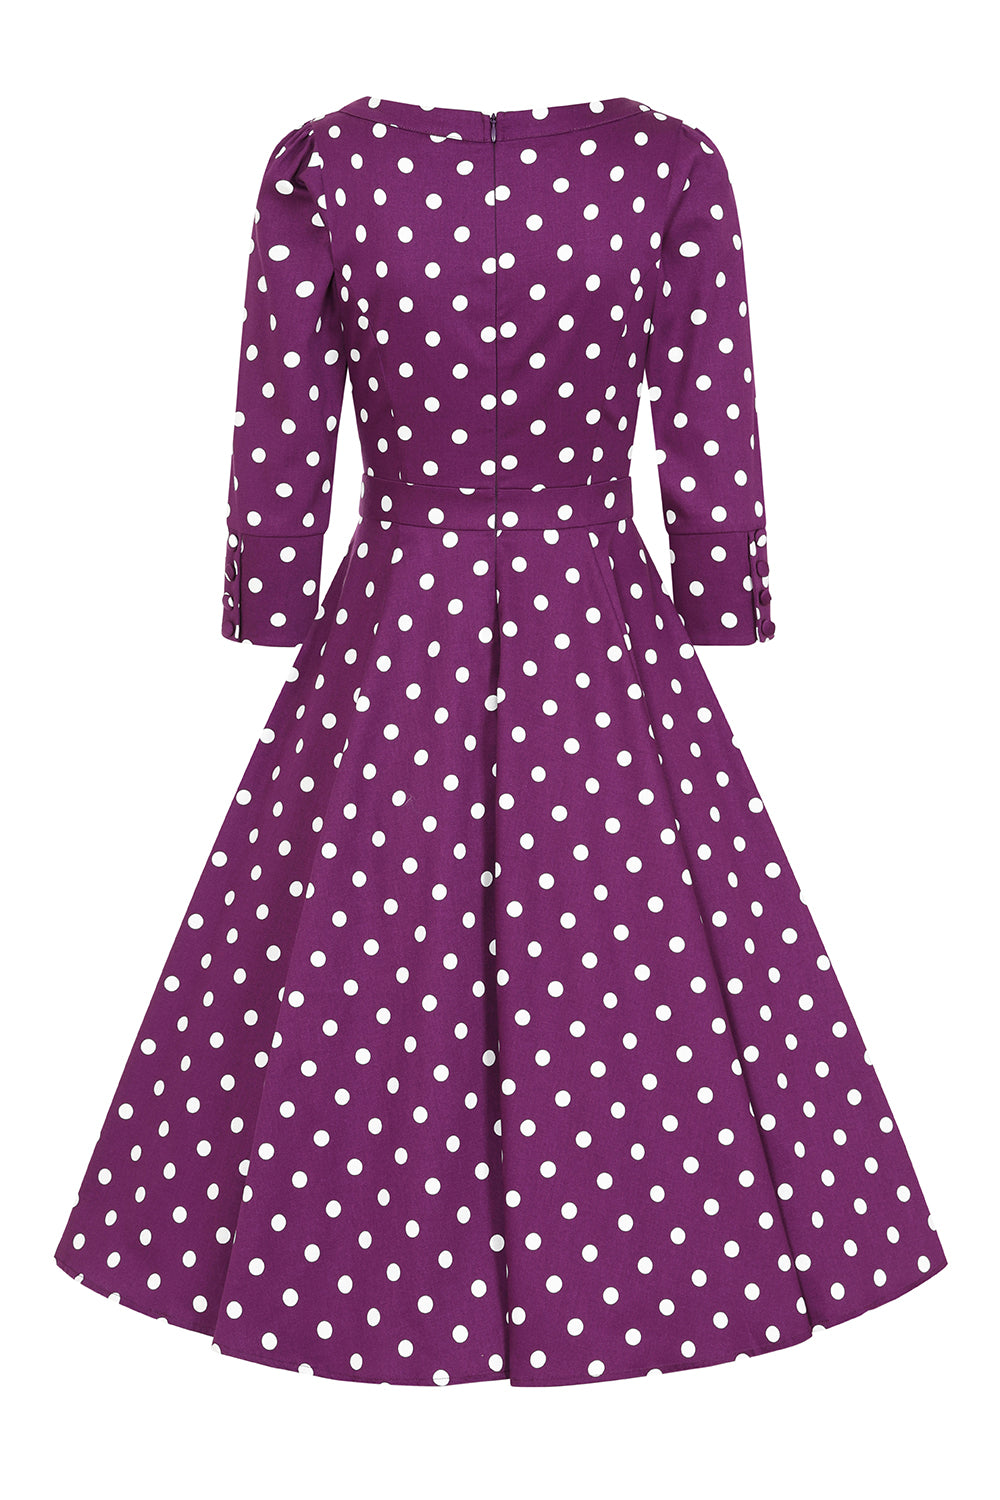 Madalyn 1950s 3 Quarter Sleeve Purple Polka Dot Swing Dress